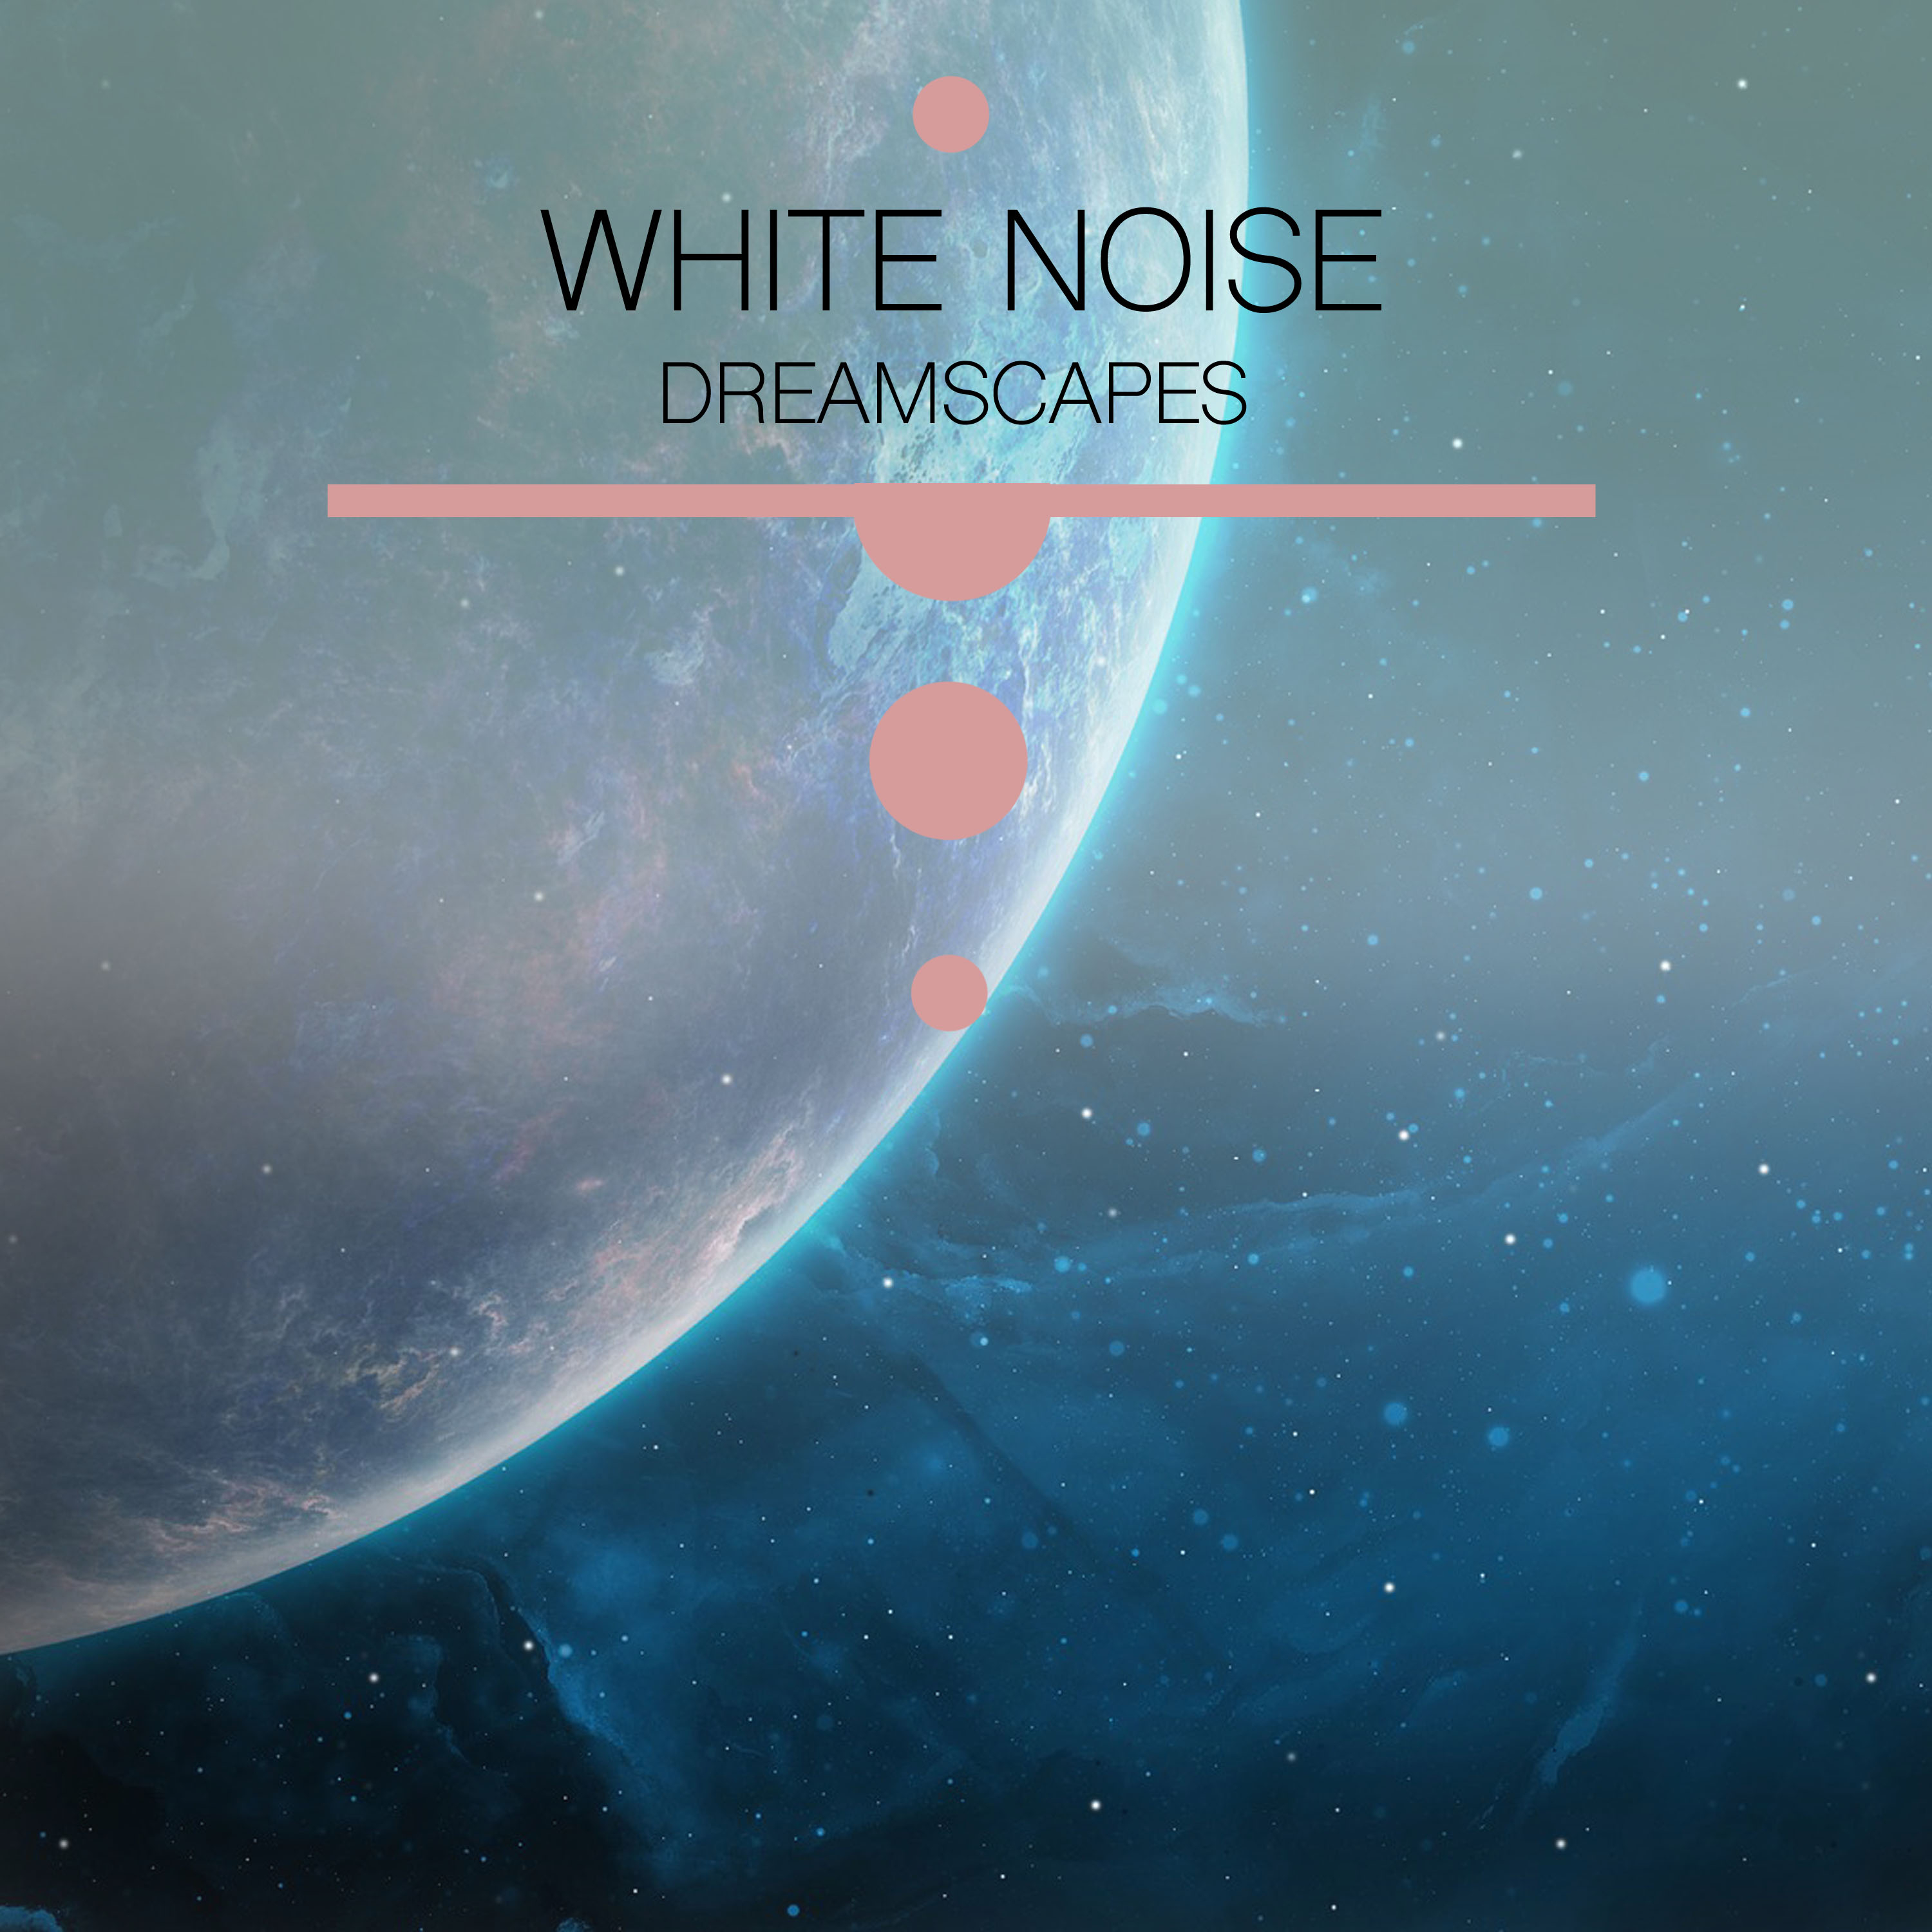 10 White Noise Dreamscapes